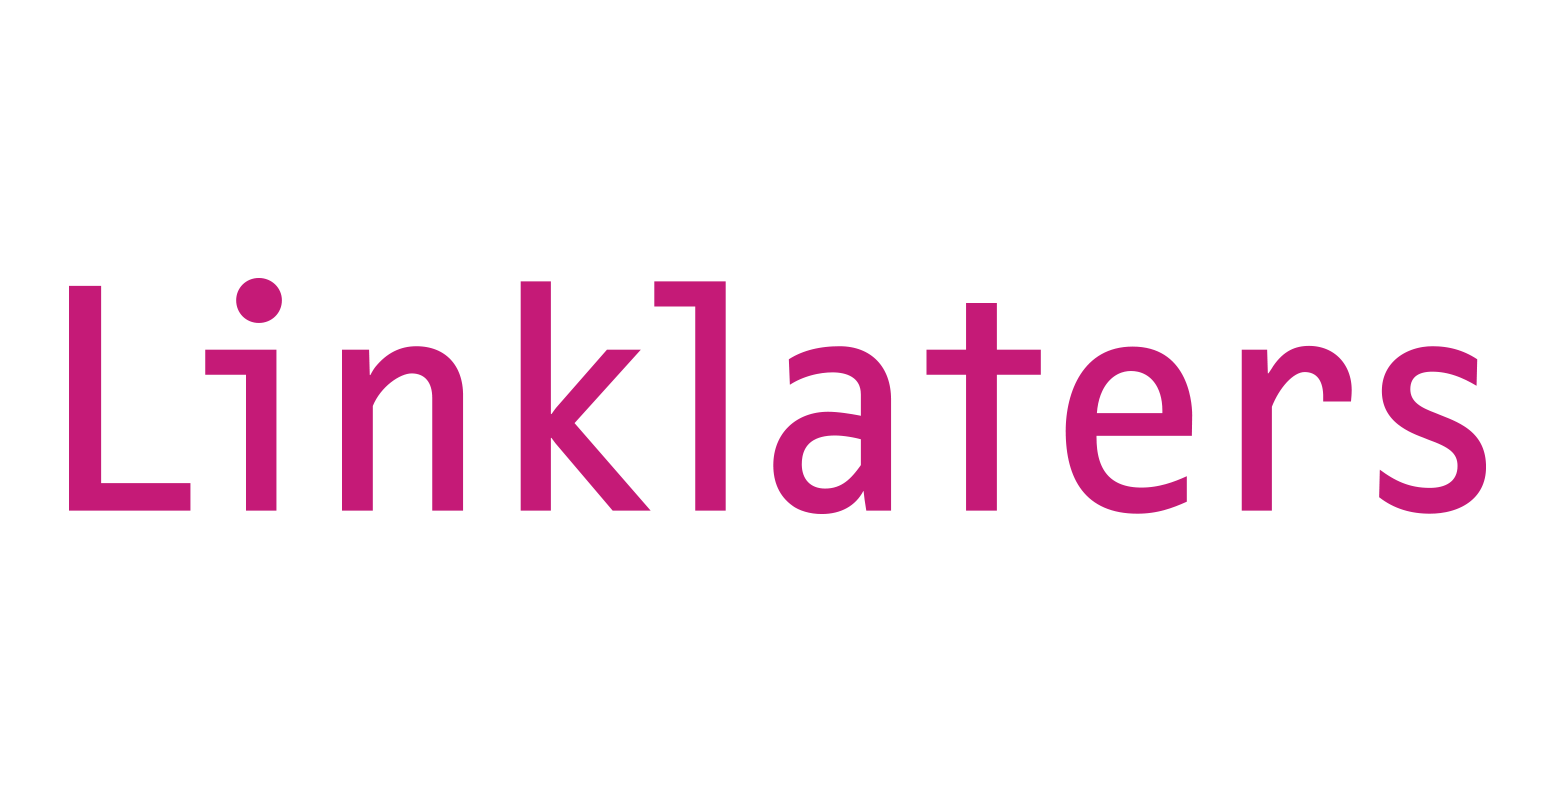 linklaters-logo